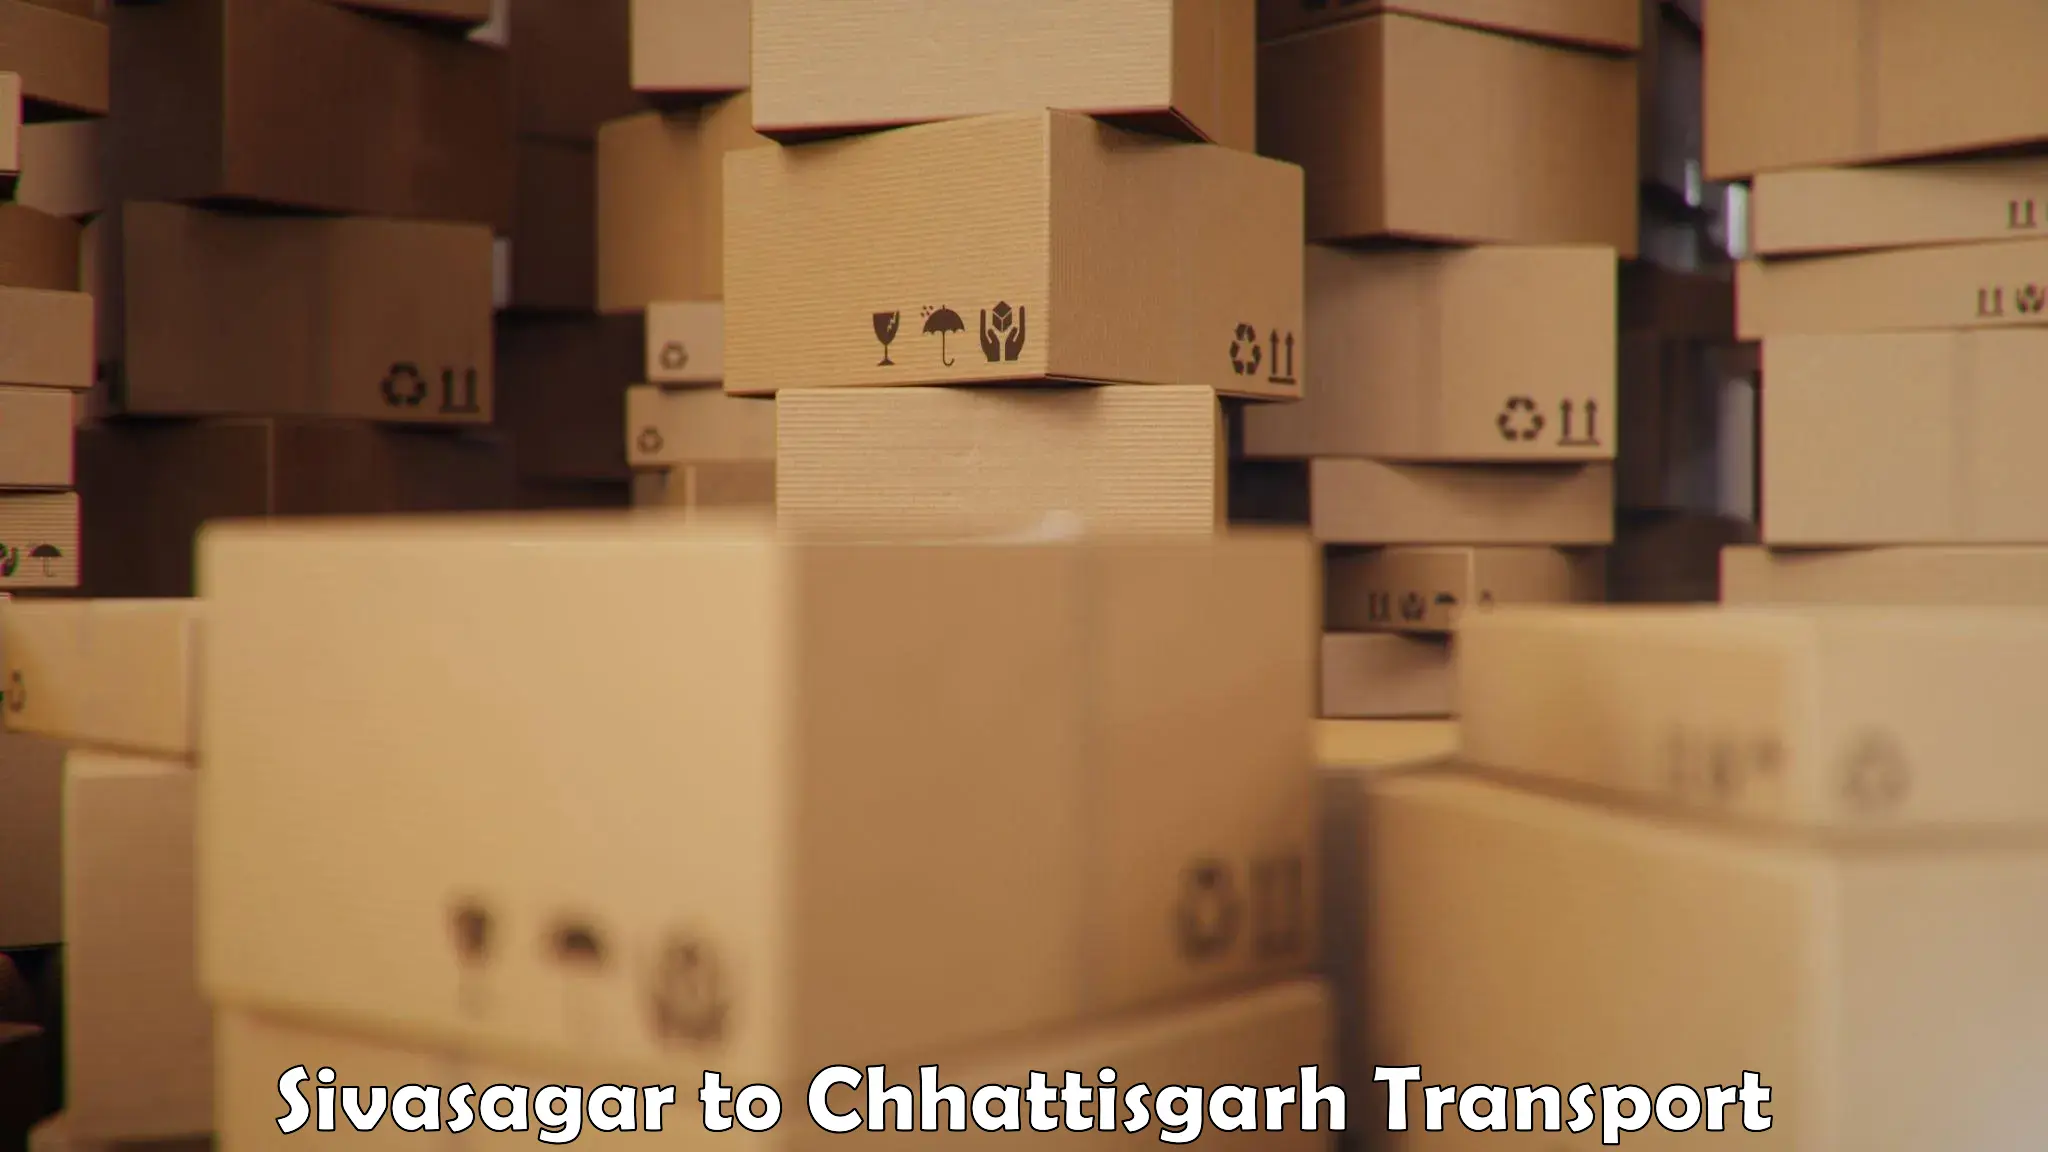 Shipping partner Sivasagar to Raigarh Chhattisgarh